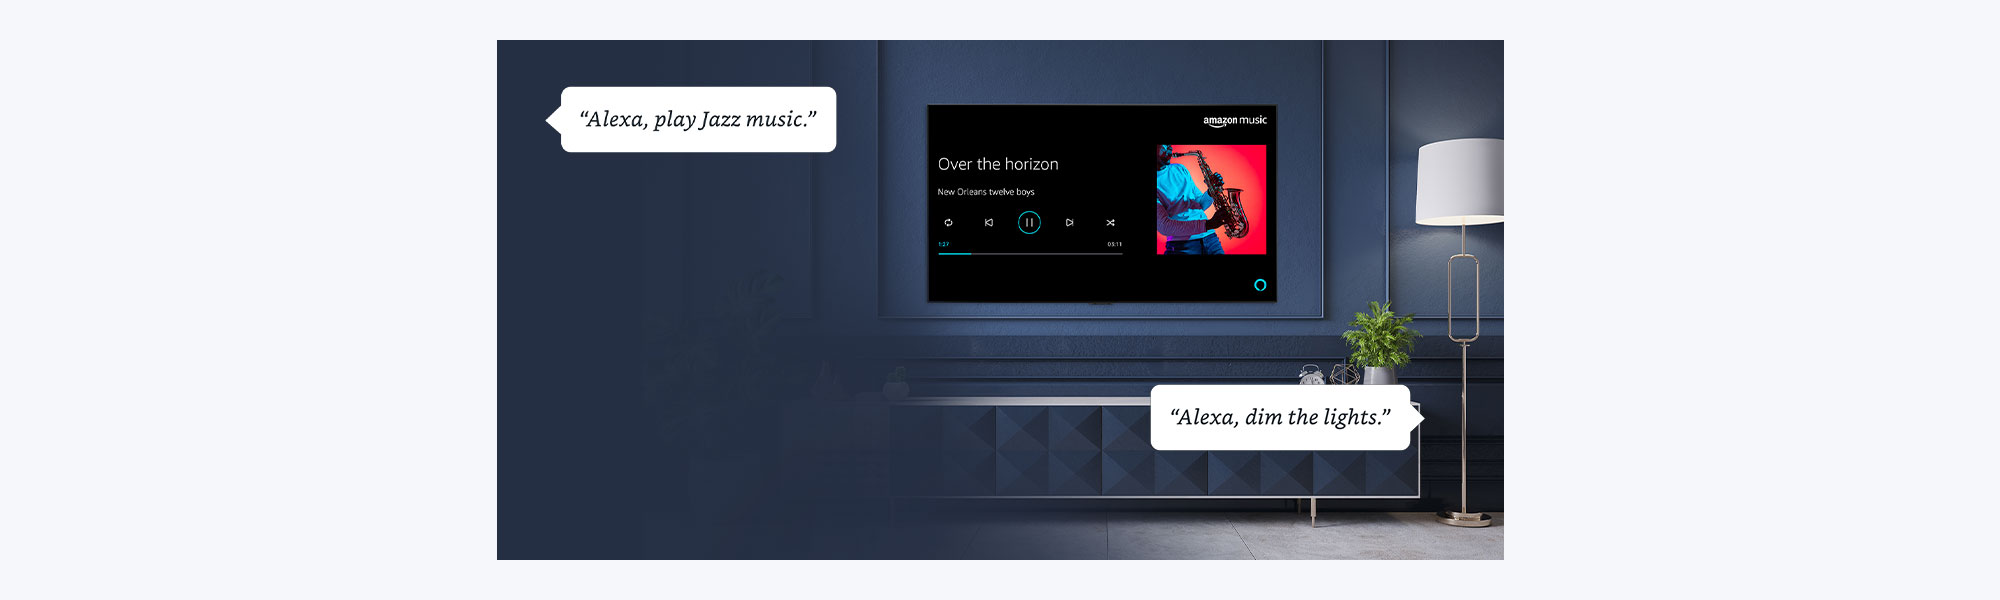 TV with music playlist on screen. Alexa, play jazz music. Alexa, dim the lights.